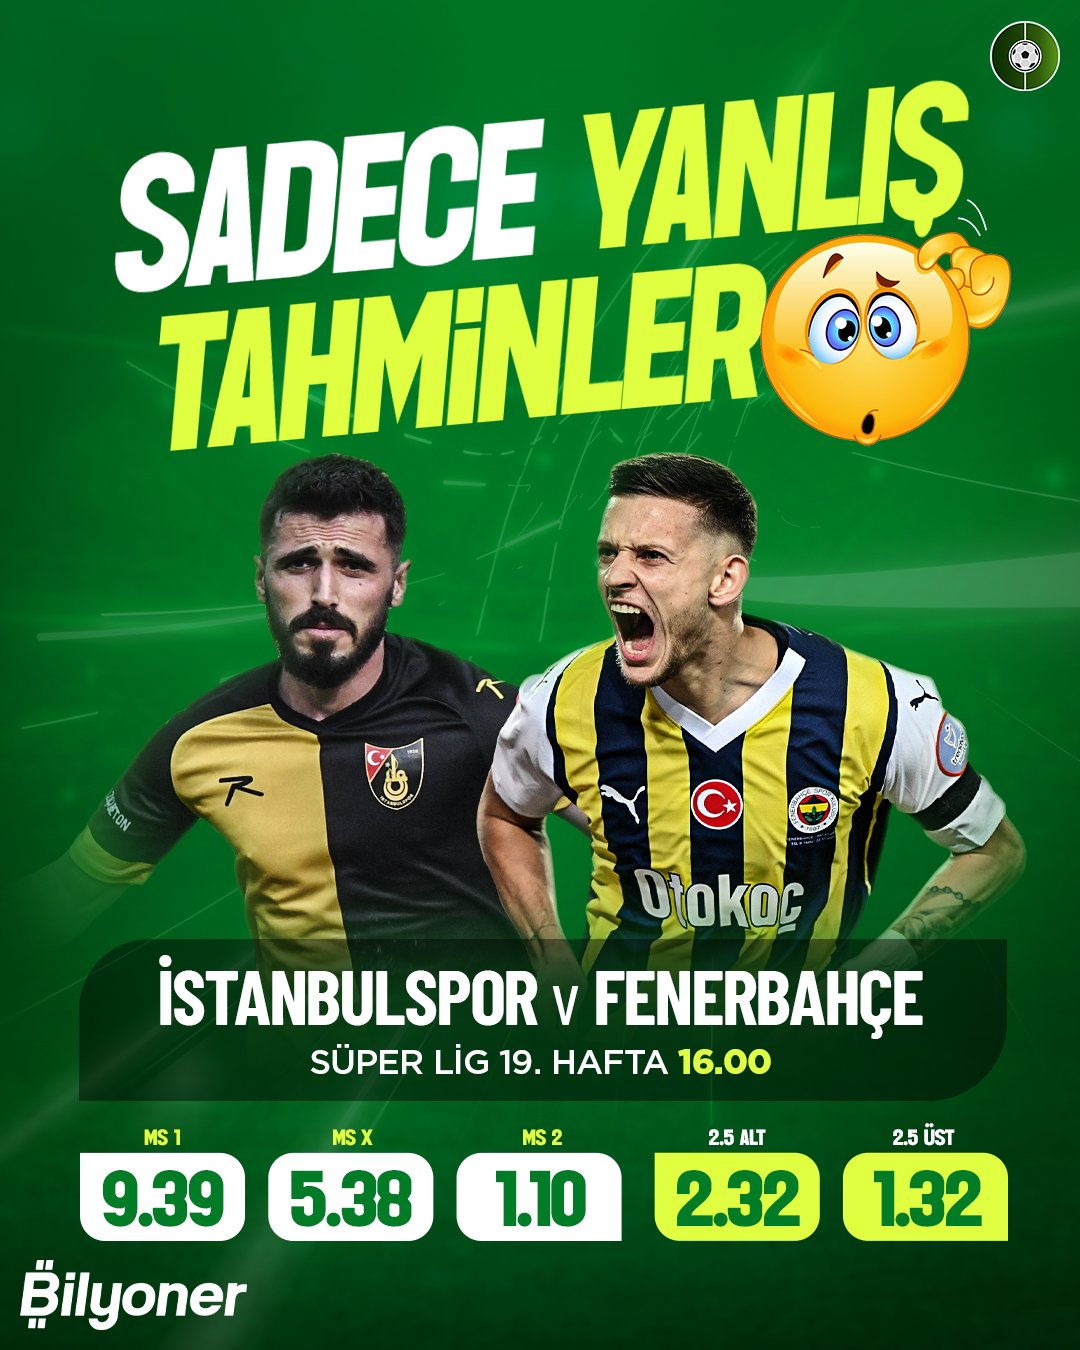 Fenerbahçe vs Galatasaray: The Legendary Rivalry in Turkish Football